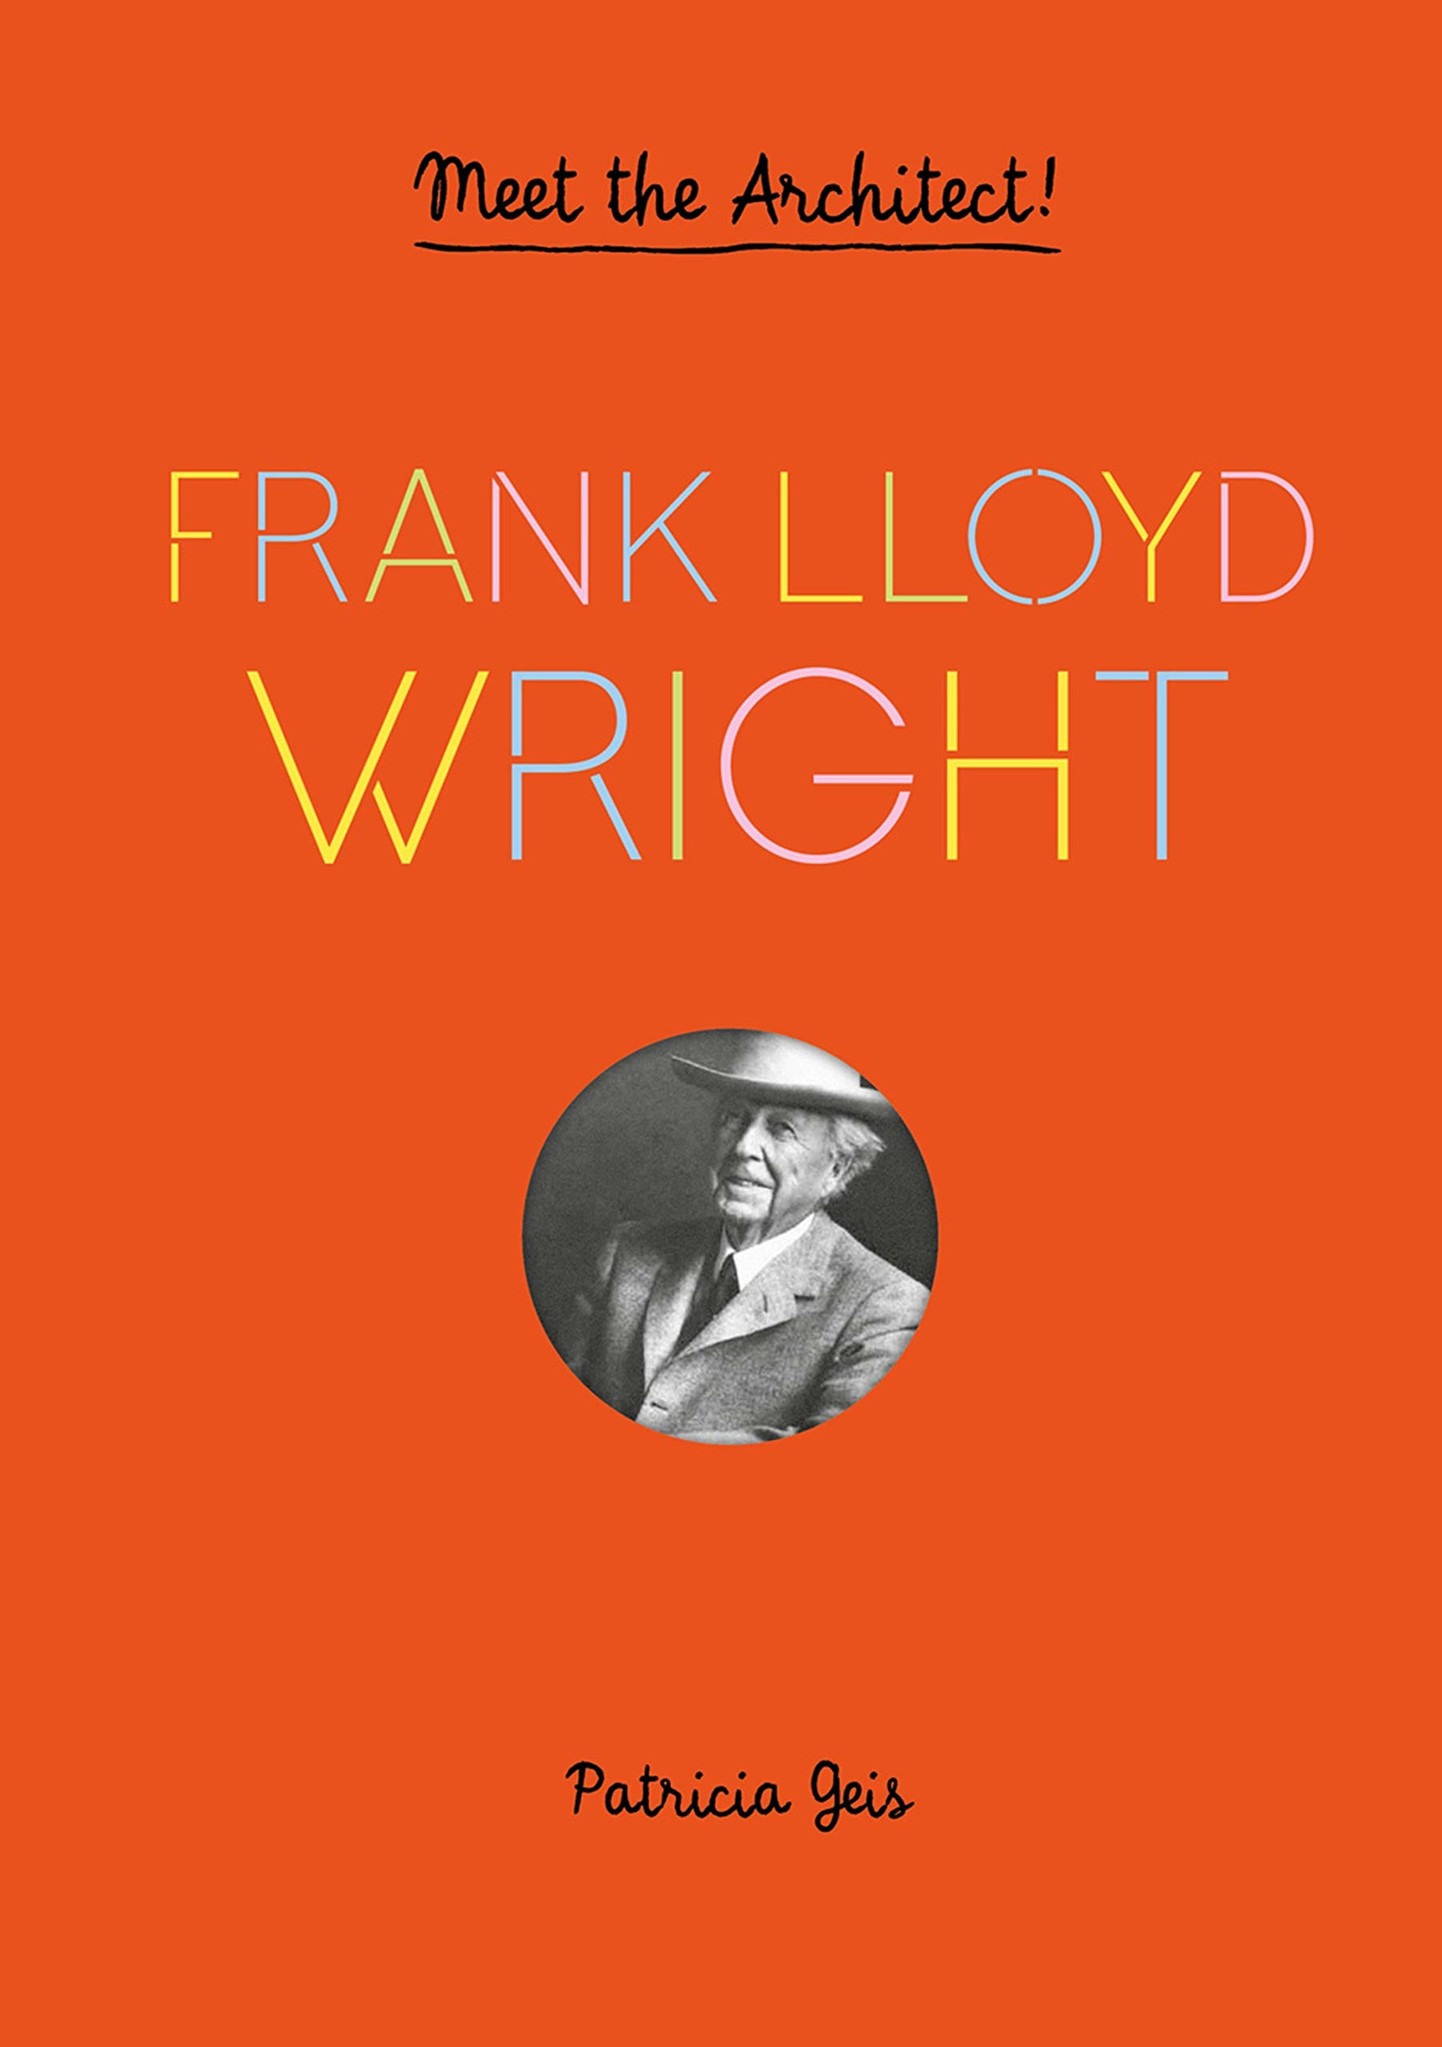 Lloyd　the　Architect　Martin　Frank　Wright's　Wright:　Museum　Lloyd　Frank　House　Meet　Store